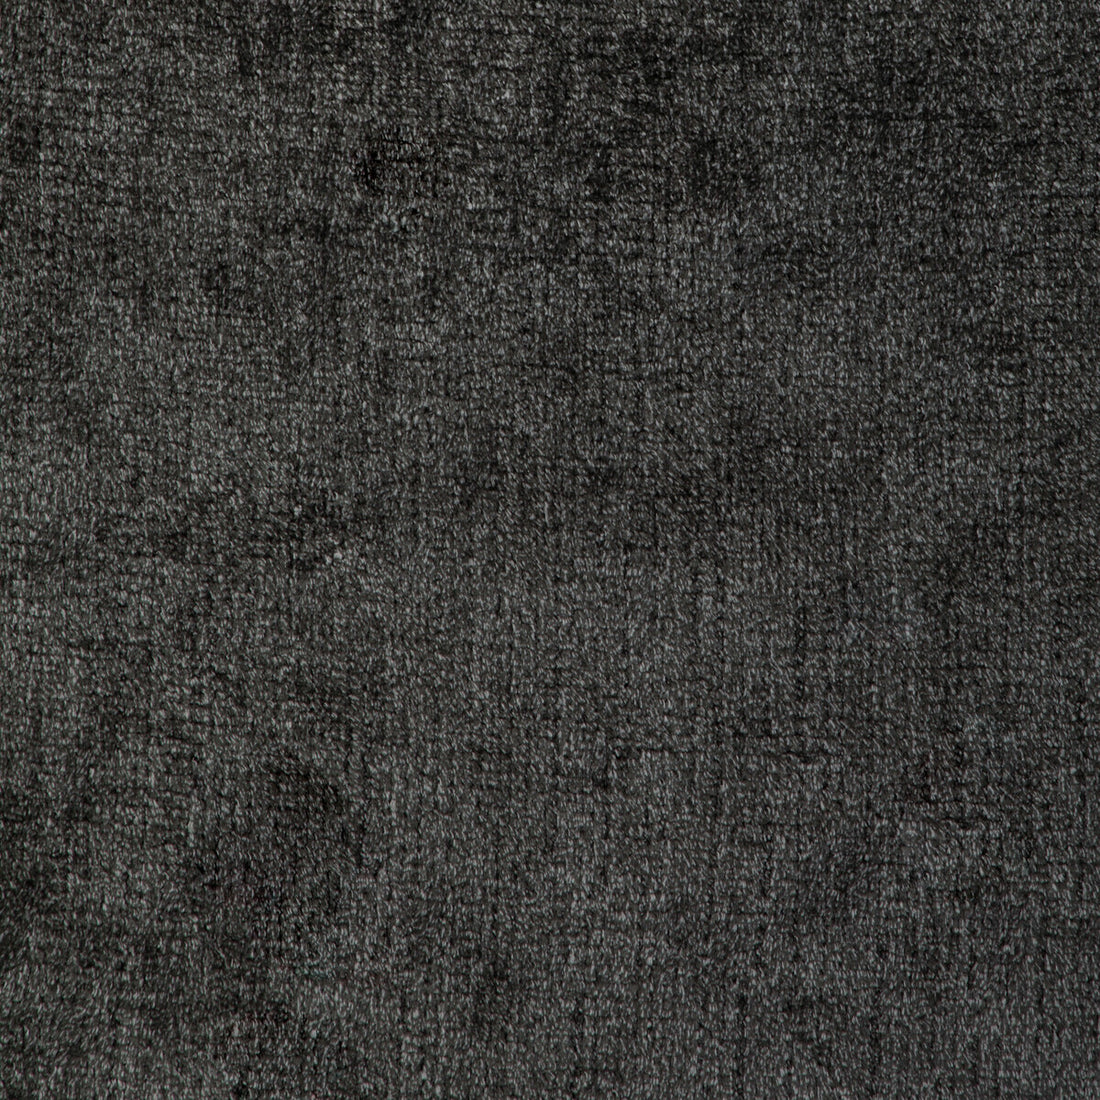 Kravet Smart fabric in 36995-2121 color - pattern 36995.2121.0 - by Kravet Smart